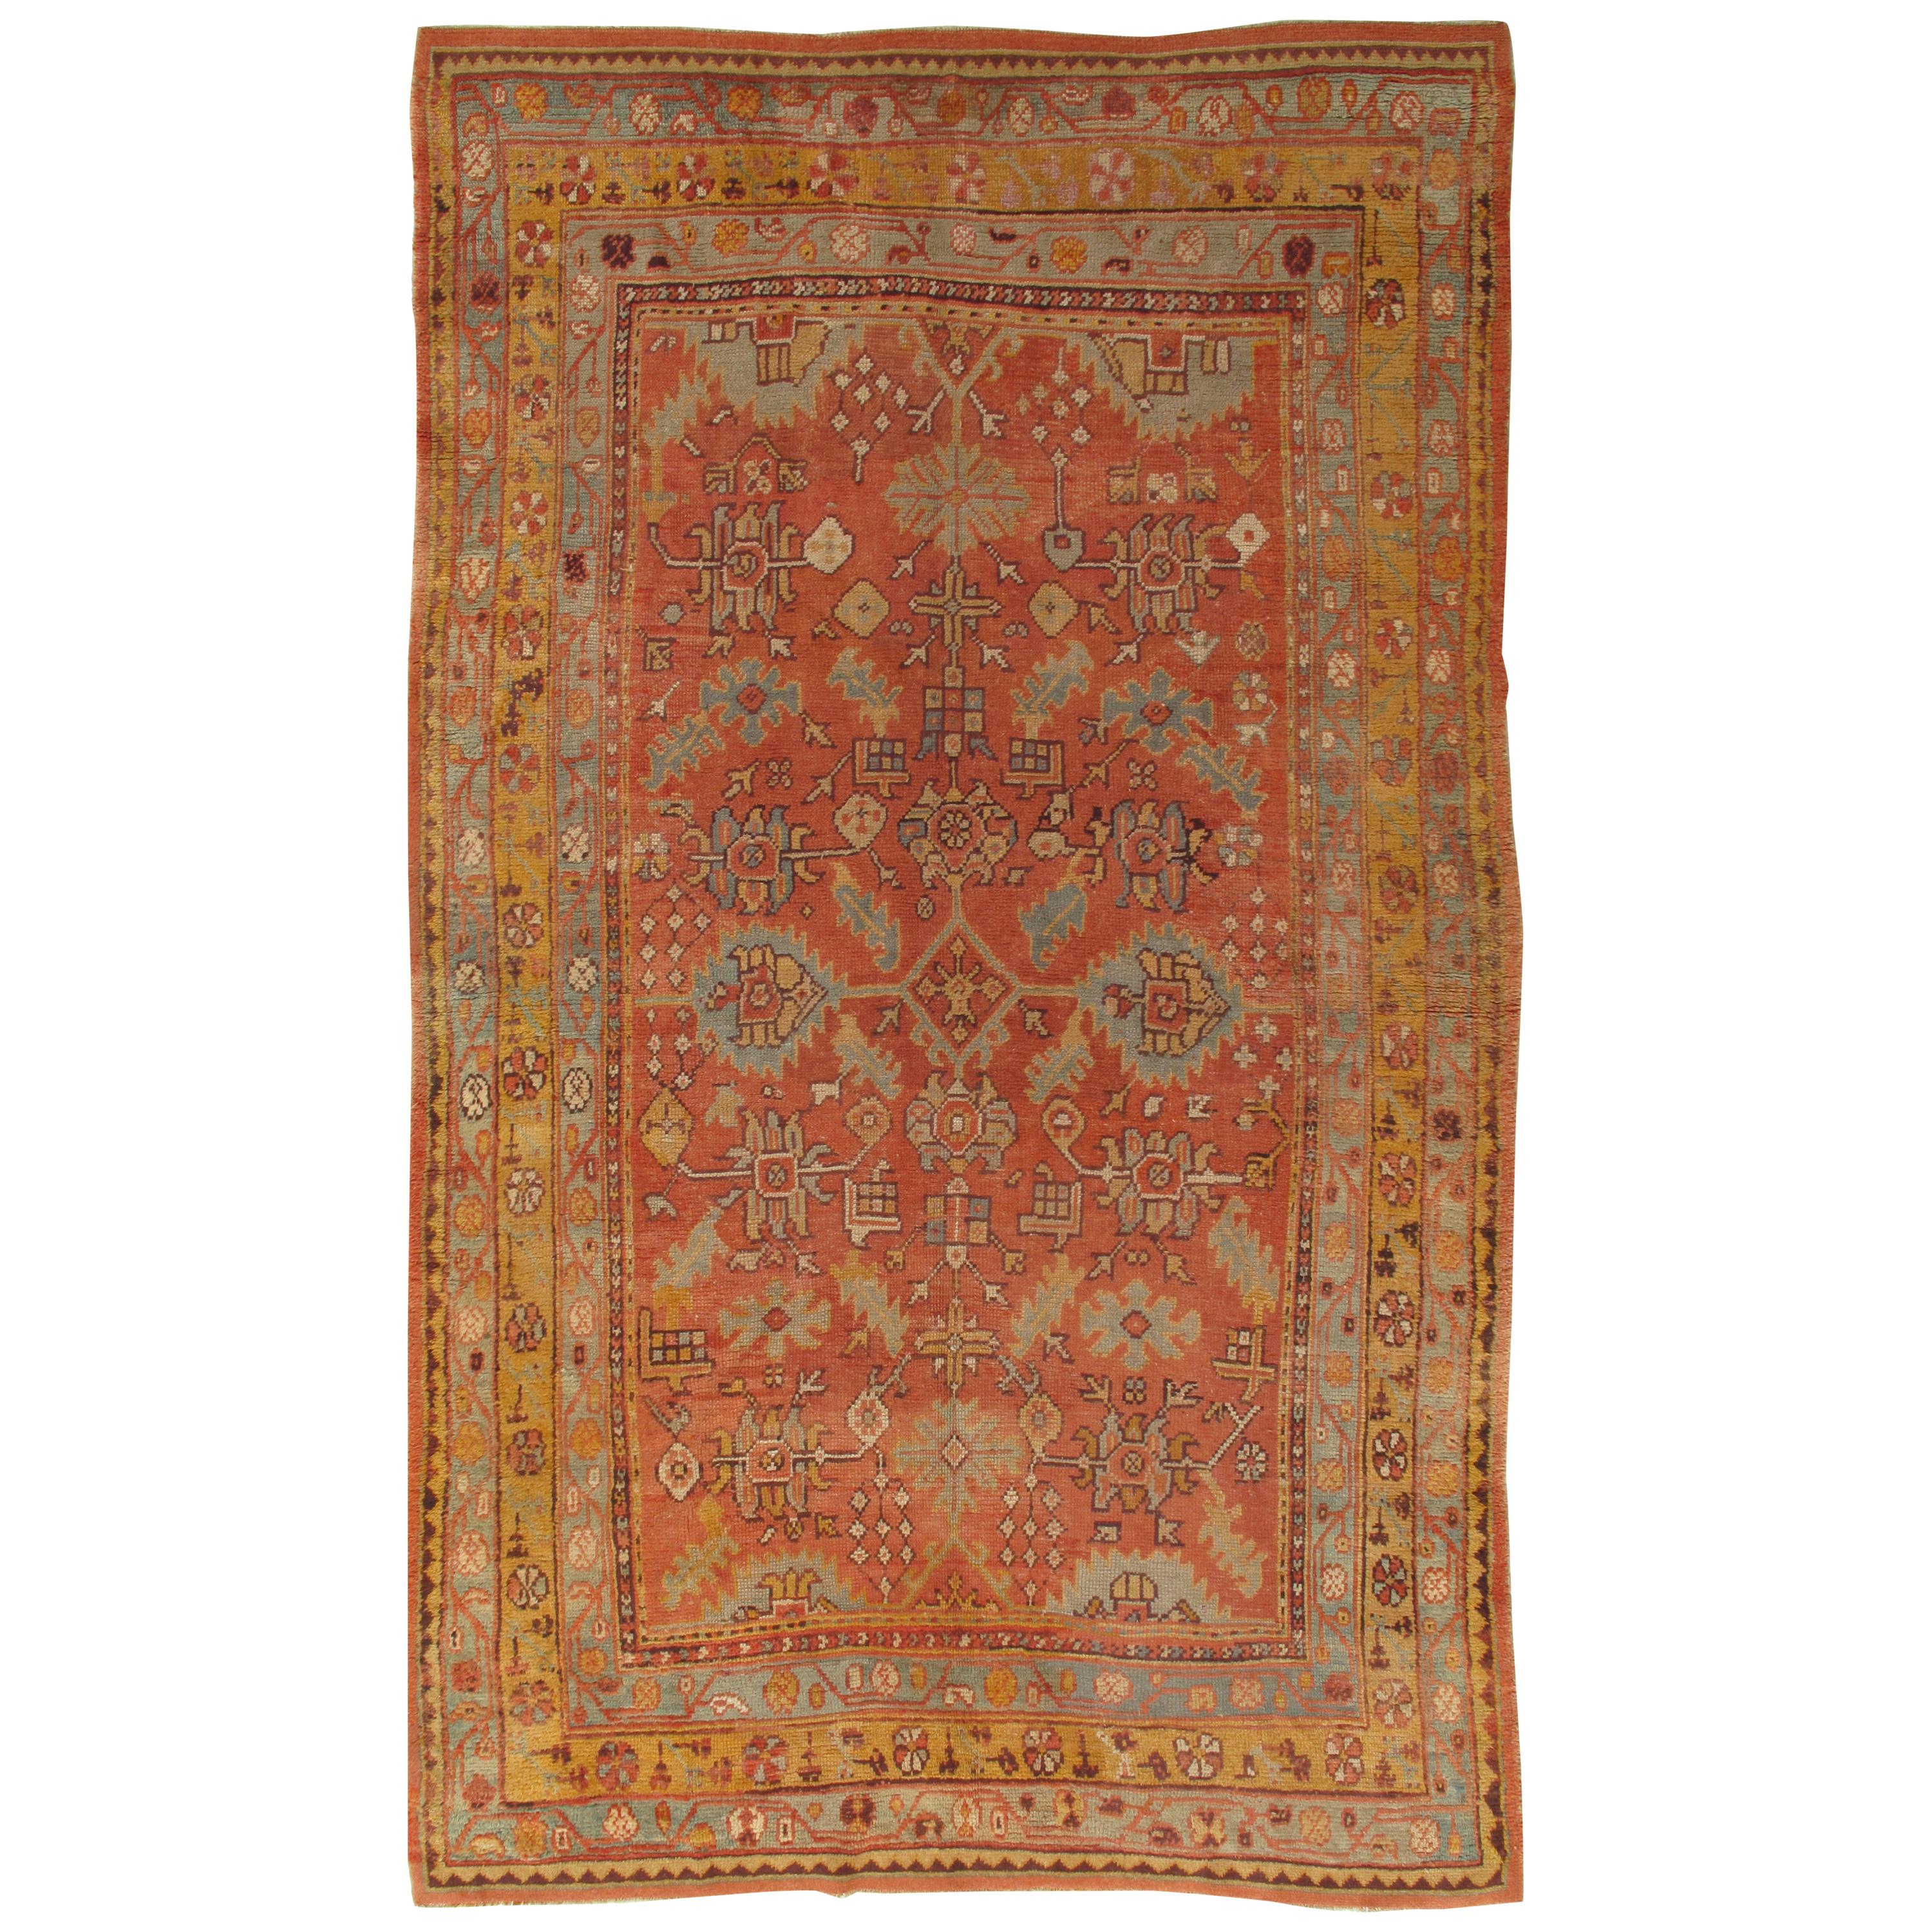 Antique Oushak Carpet, Oriental Rug, Handmade Rug Saffron, Light Blue and Coral